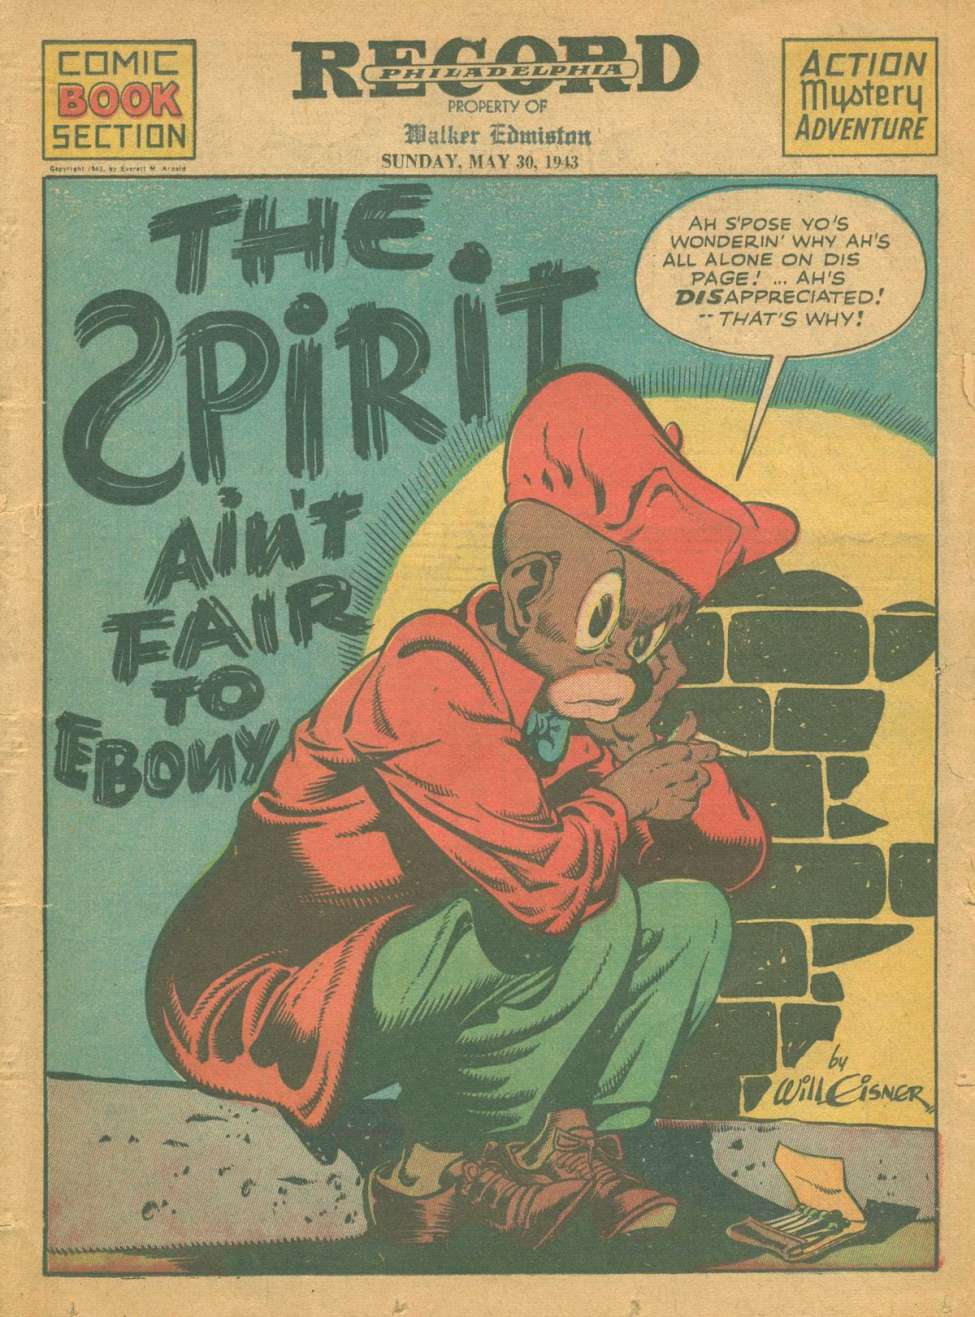 Comic Book Cover For The Spirit (1943-05-30) - Philadelphia Record - Version 2